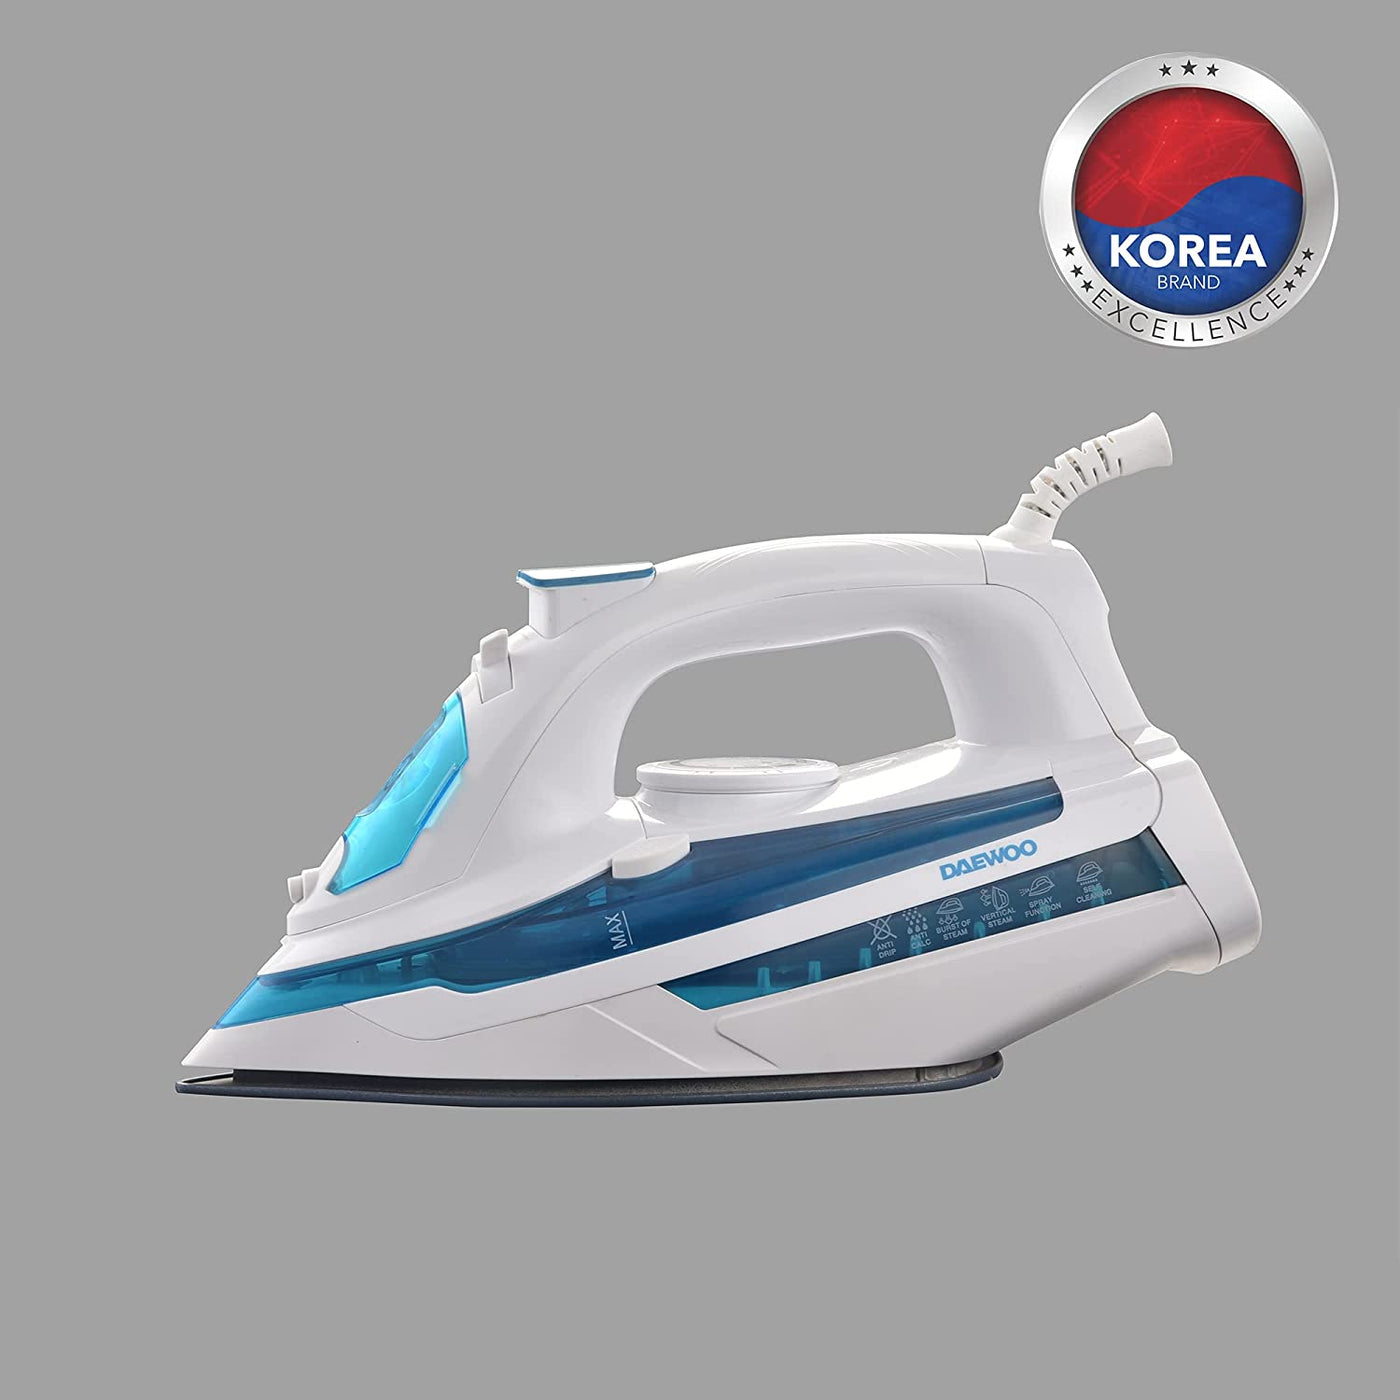 2400W Steam Iron With Ceramic Soleplate, Antidrip, Anticalc, Auto Shutoff, Self Clean, Spray & Steam Function Korean Technology White/Blue